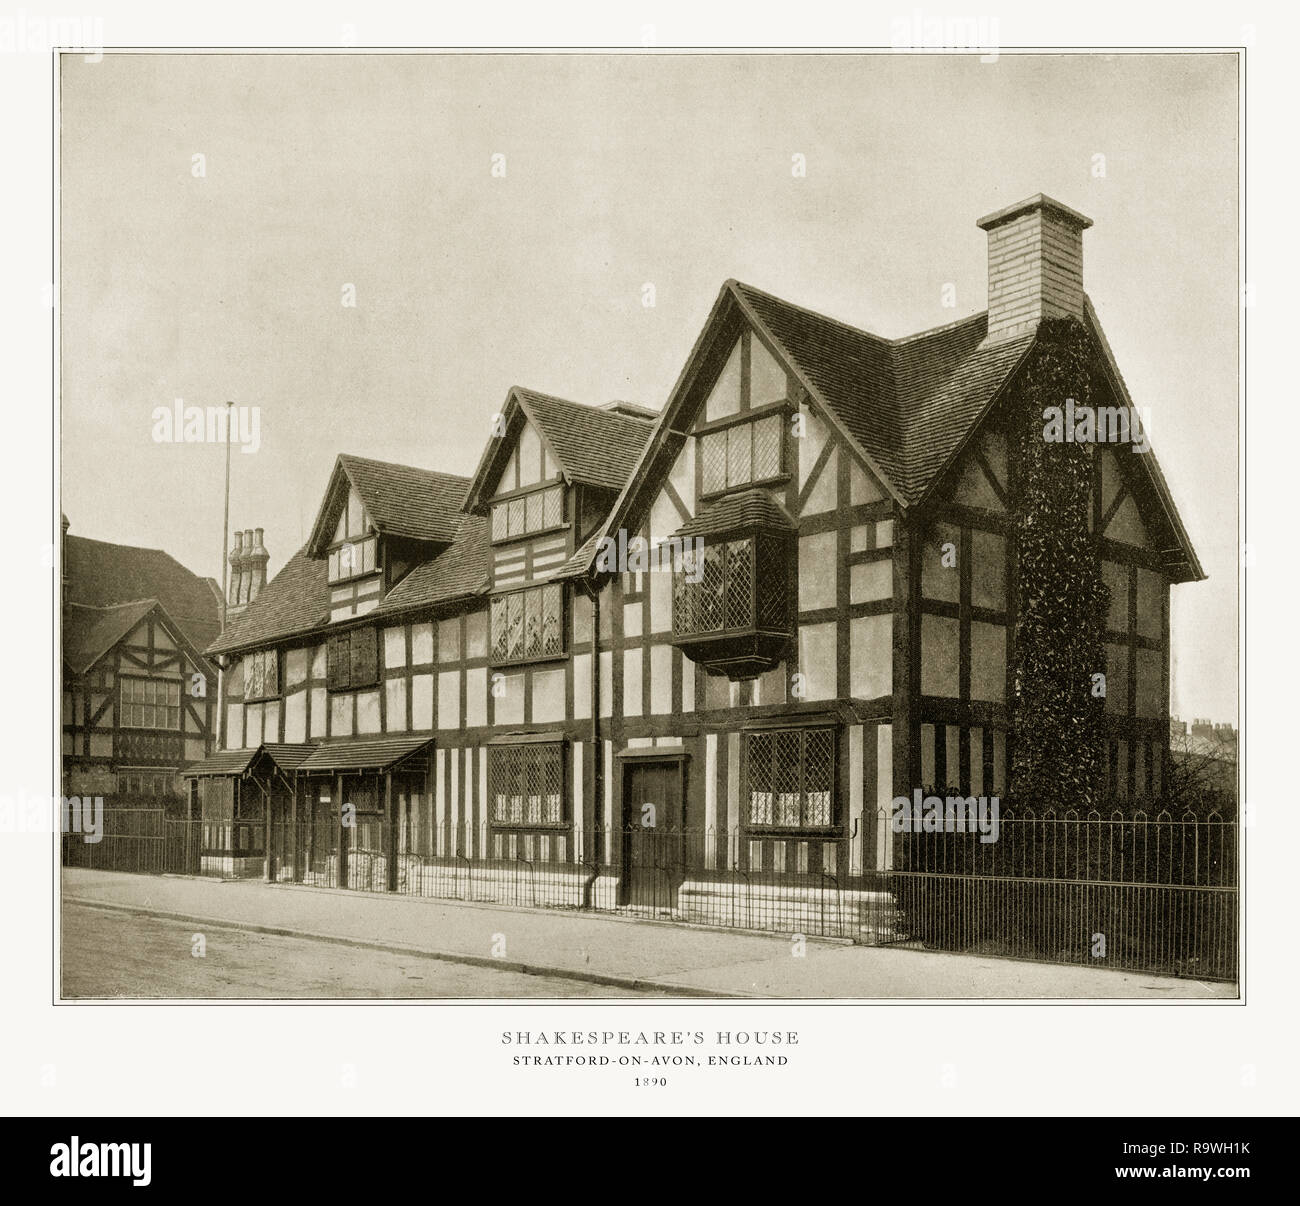 La maison de Shakespeare, Stratford-On-Avon, England, Angleterre, 1893 Photographie Ancienne Banque D'Images